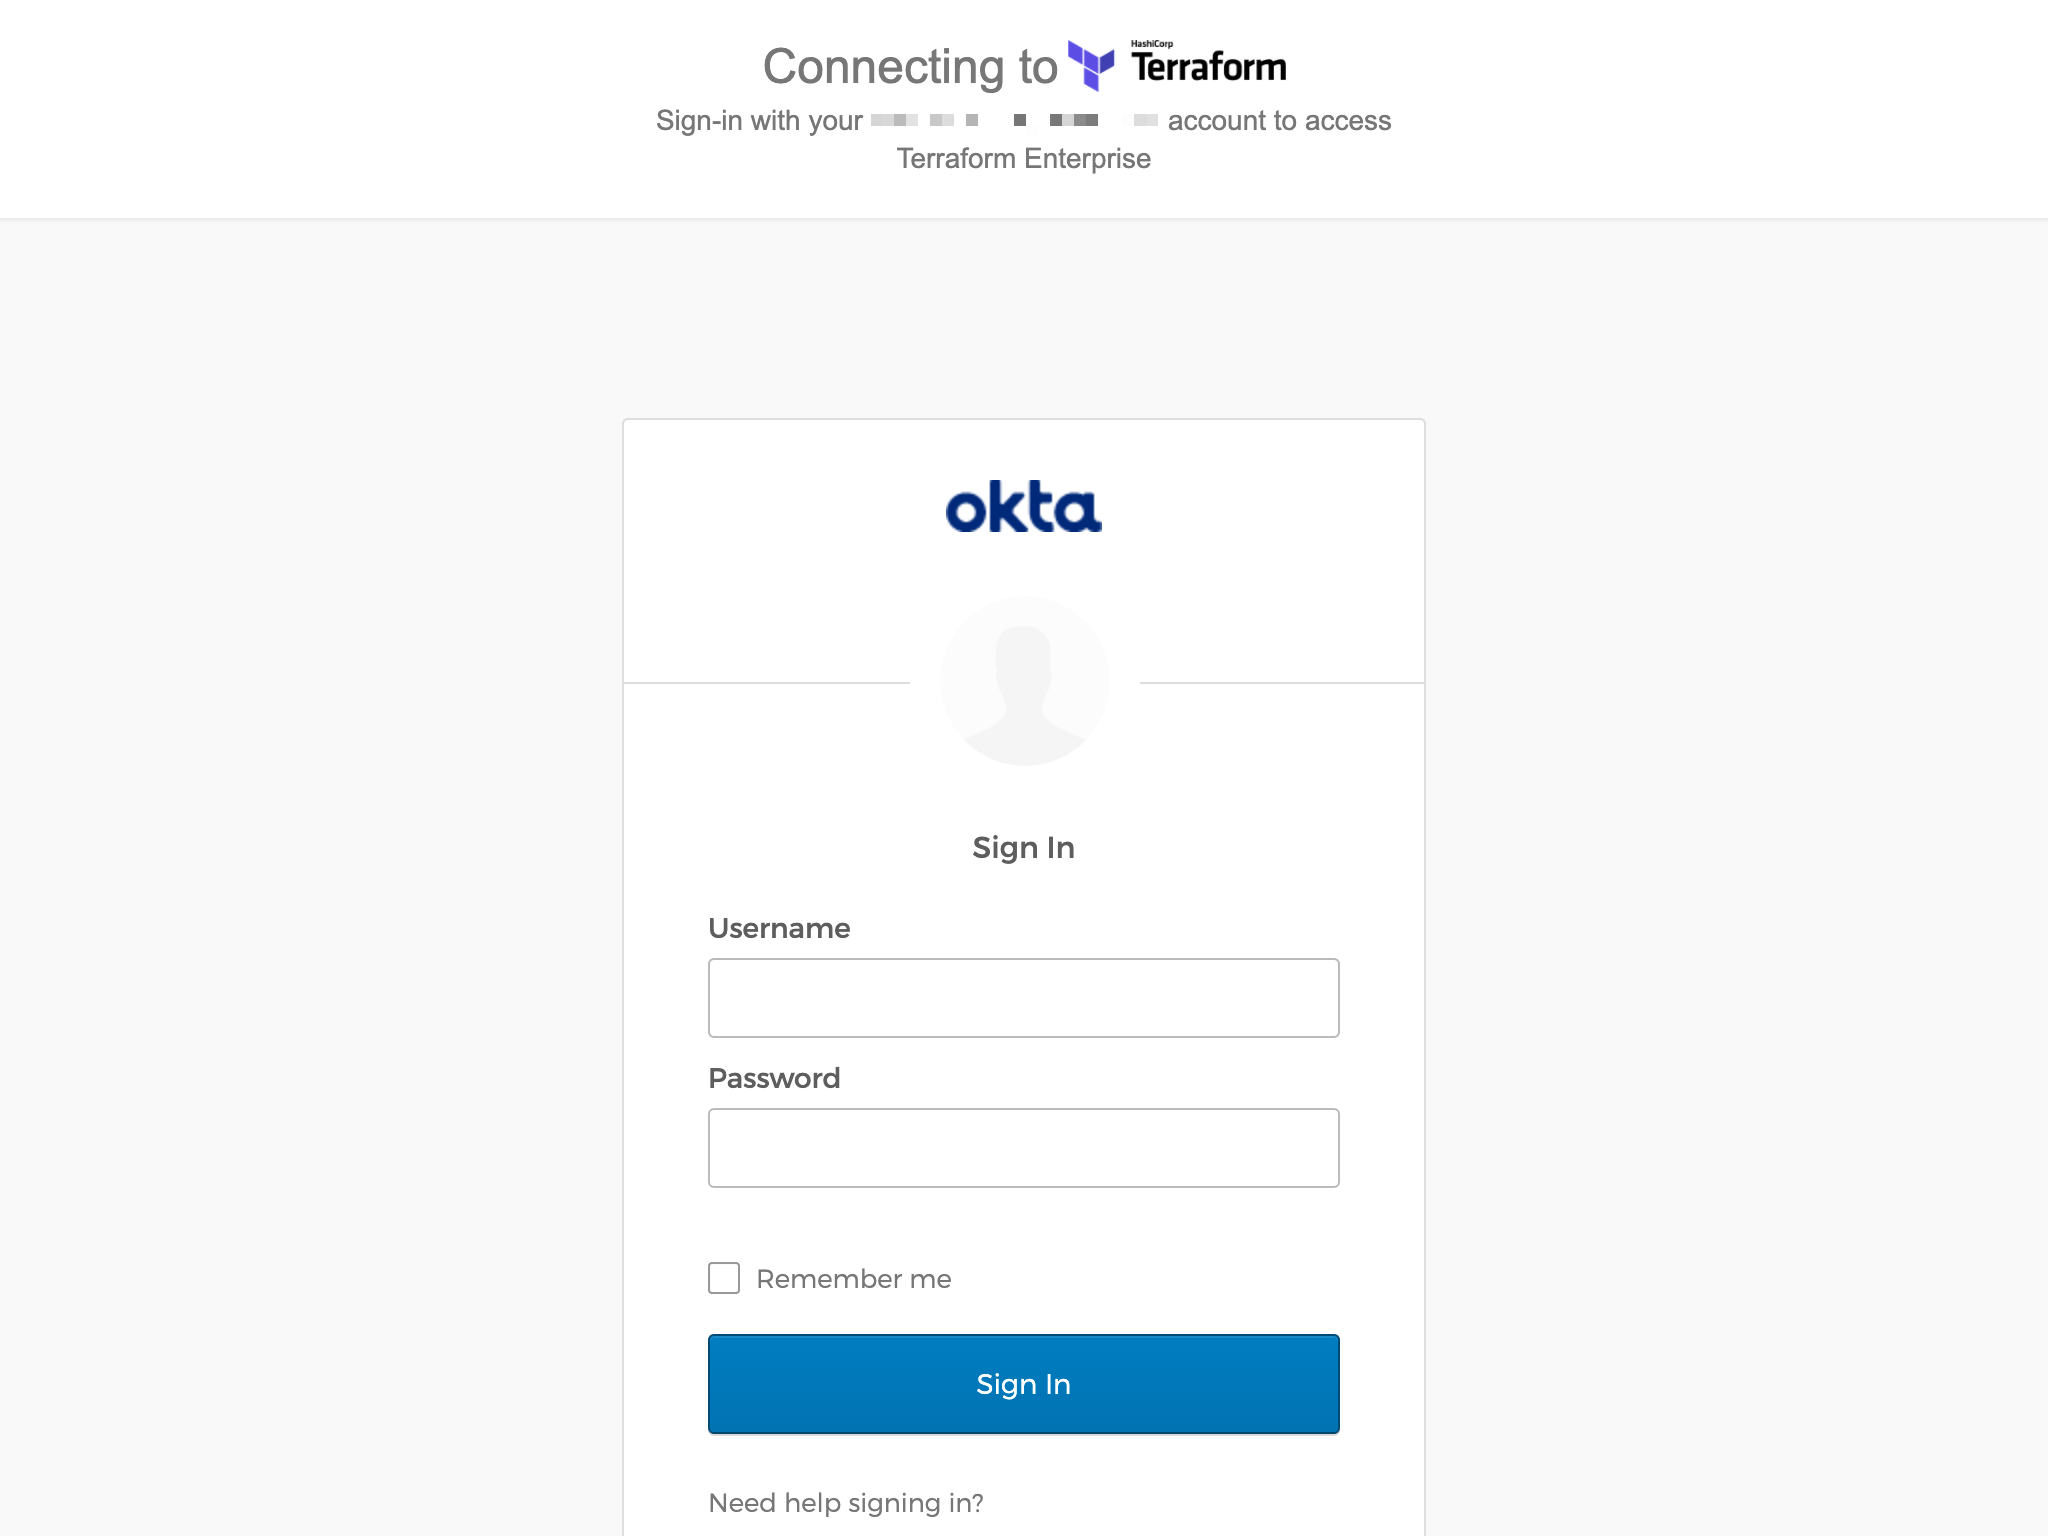 After clicking login via SAML, Terraform Enterprise will redirect you to Okta sign in page